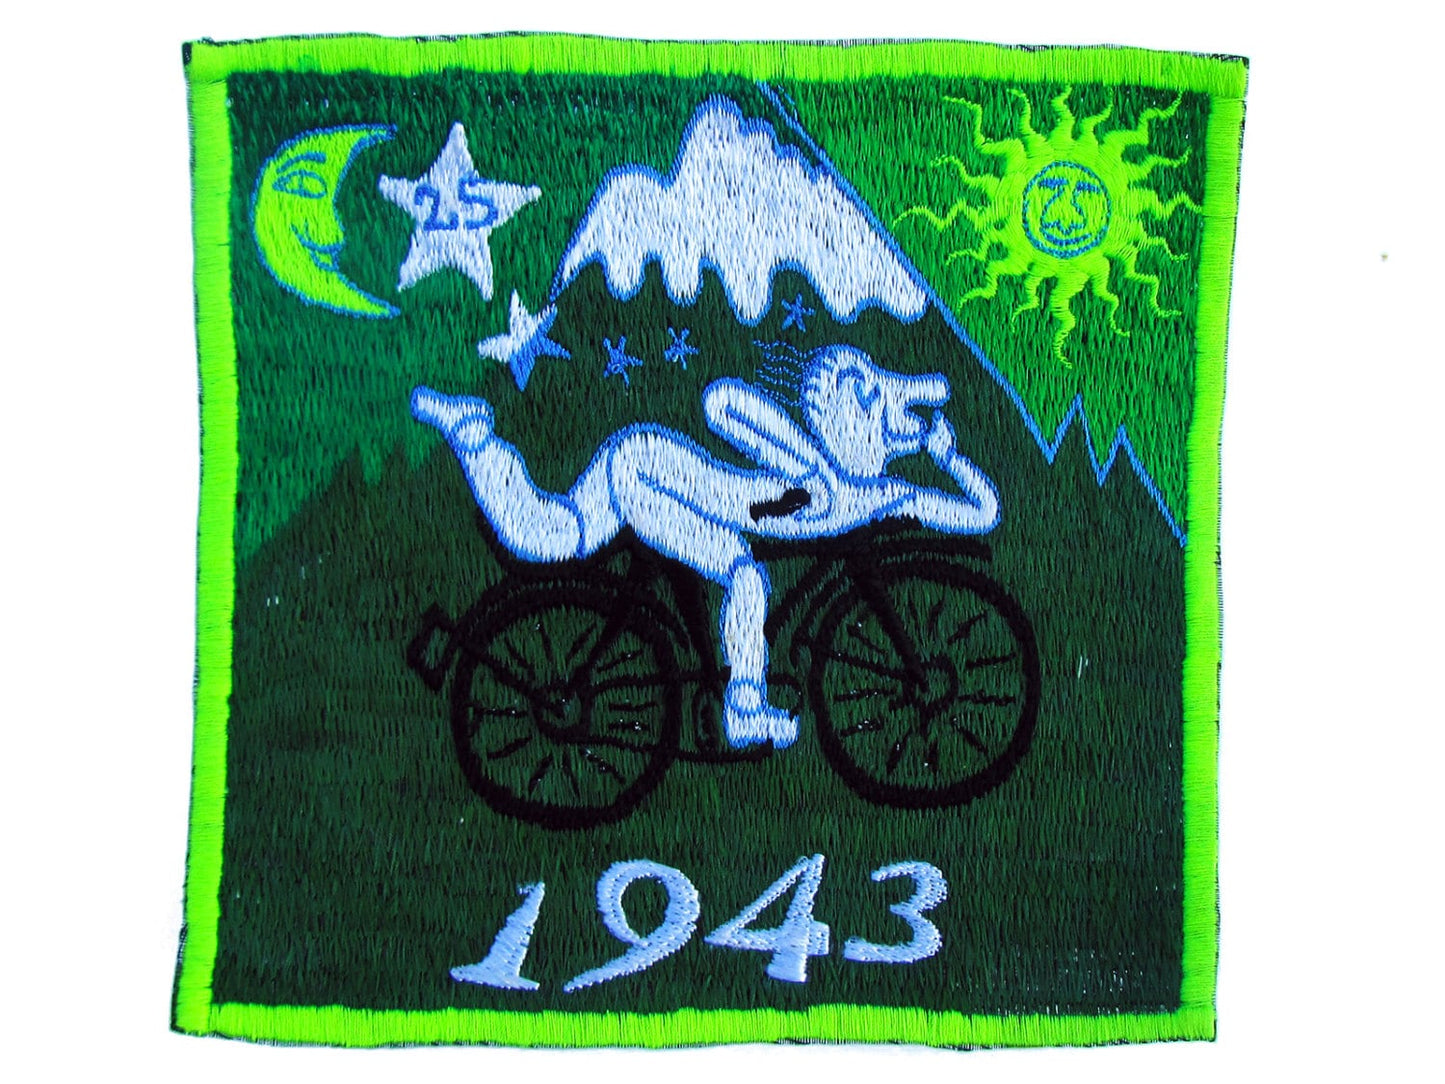 Green Bicycle Day LSD Cult Patch Albert Hofmann 1943 Burning Man Psychedelic Acid Trip Hippie Visionary Drug Cosmic Healing Medicine